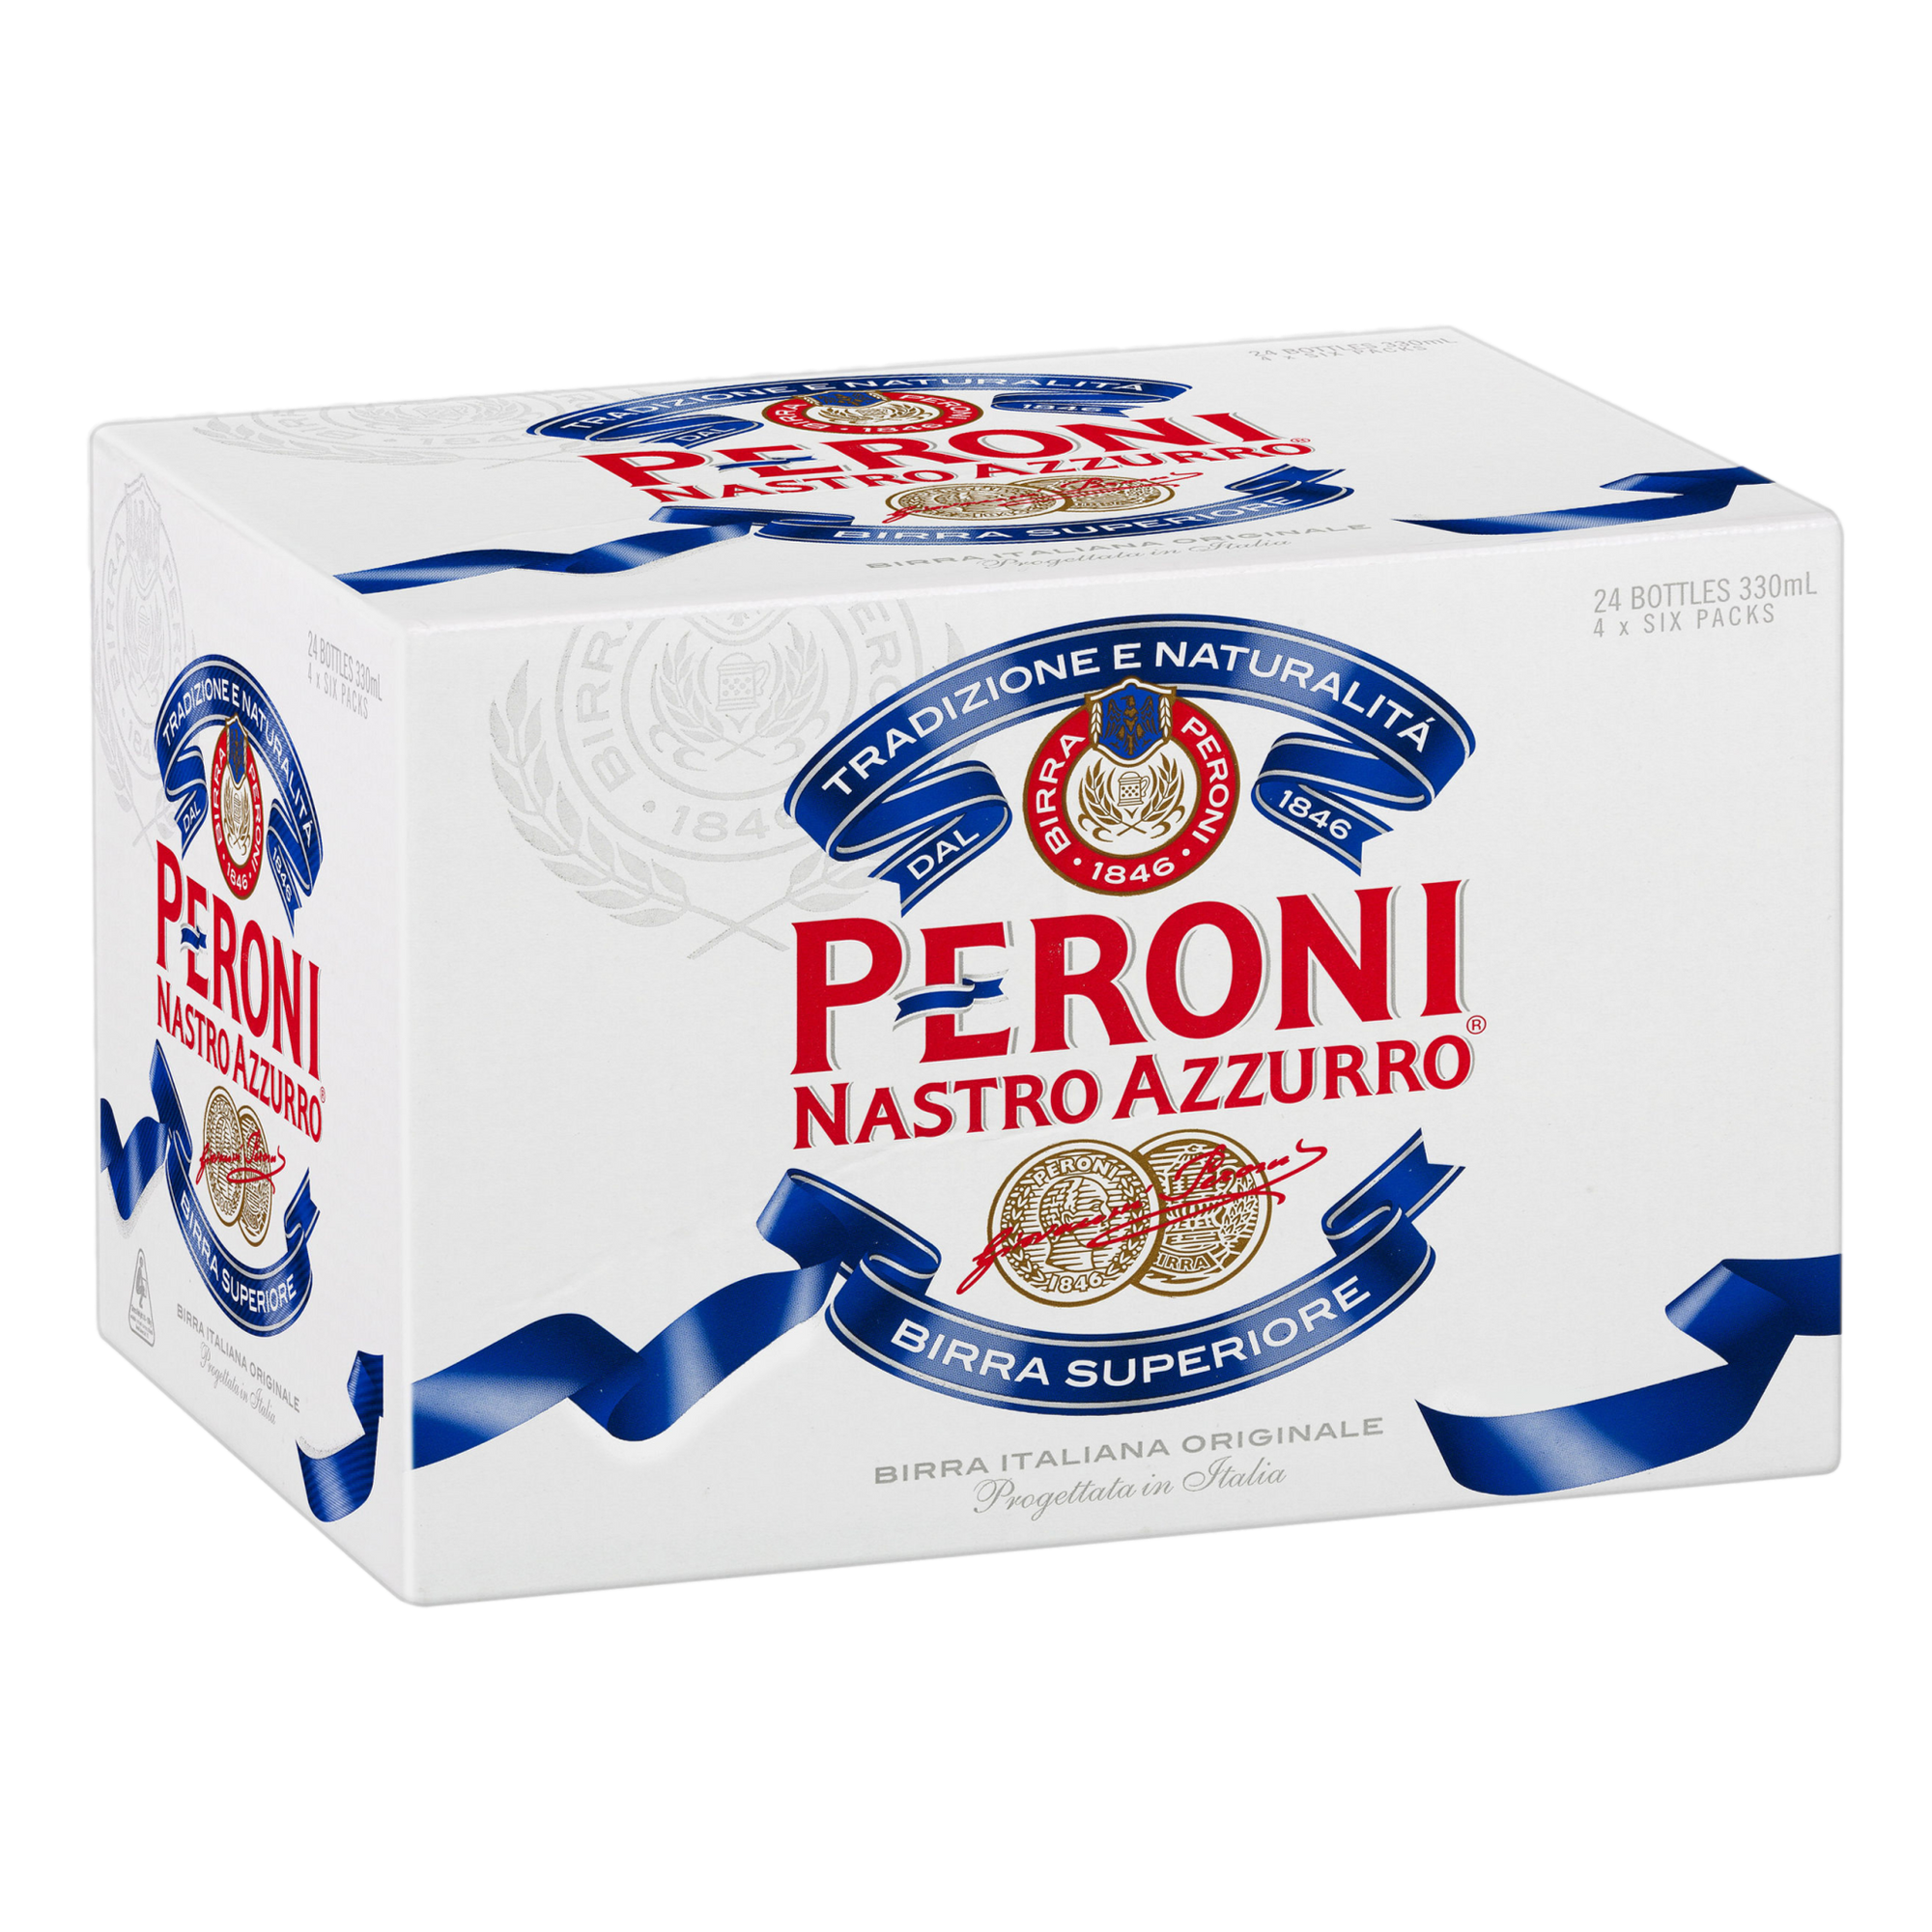 Peroni Nastro Azzurro Lager 330ml Bottle Case of 24